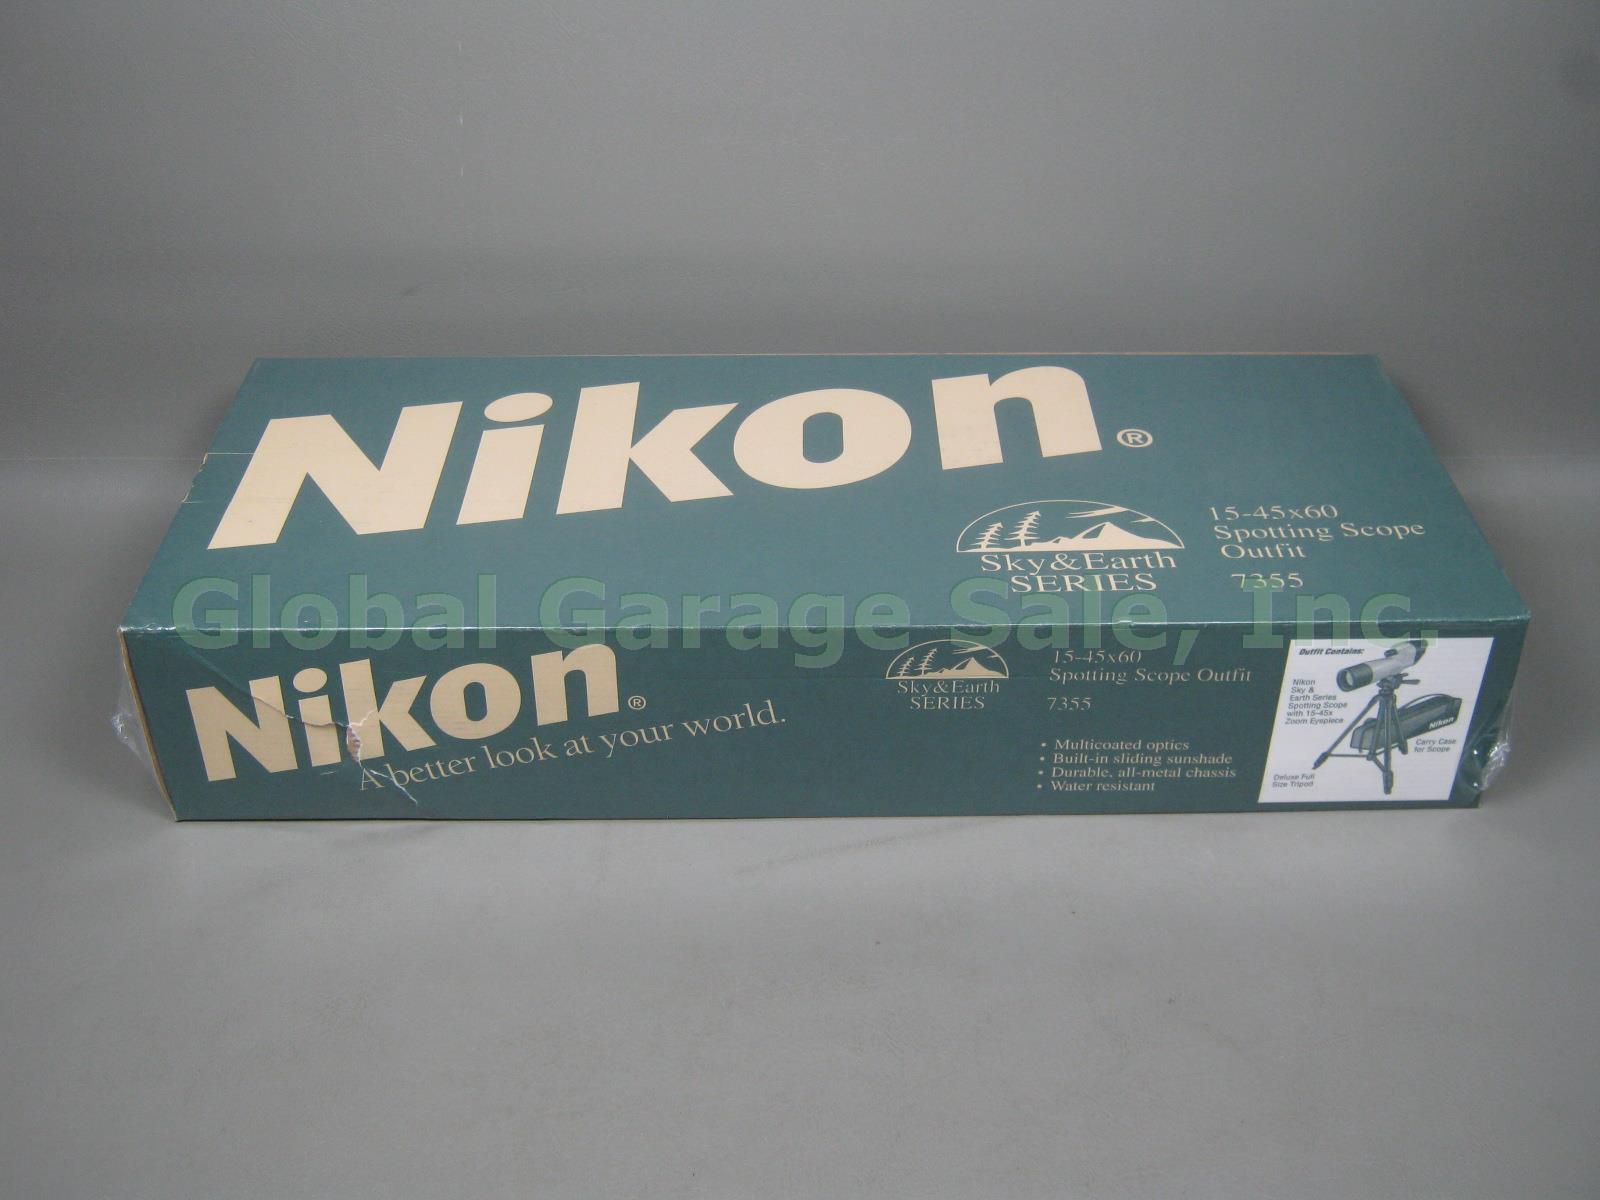 New Sealed Nikon Sky & Earth Series 15-45x60 Spotting Scope Outfit 7355 W/Tripod